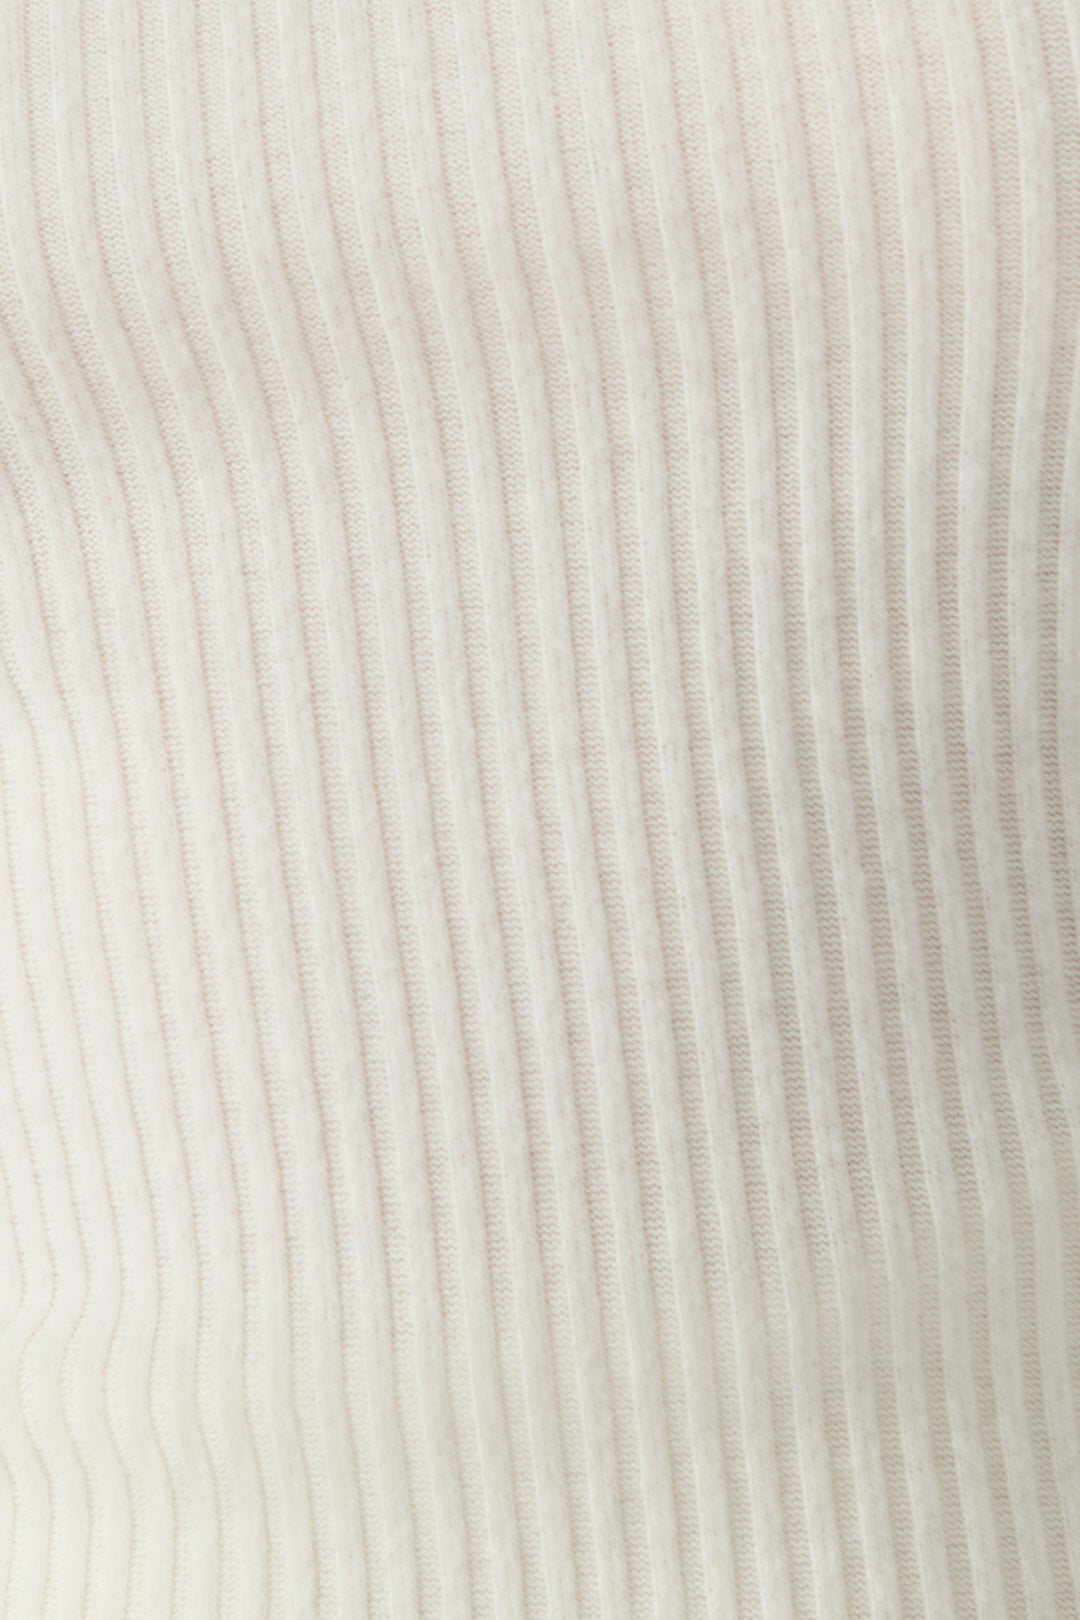 Women's ivory rib knit semi-fitted sleep short with curly-edge hem